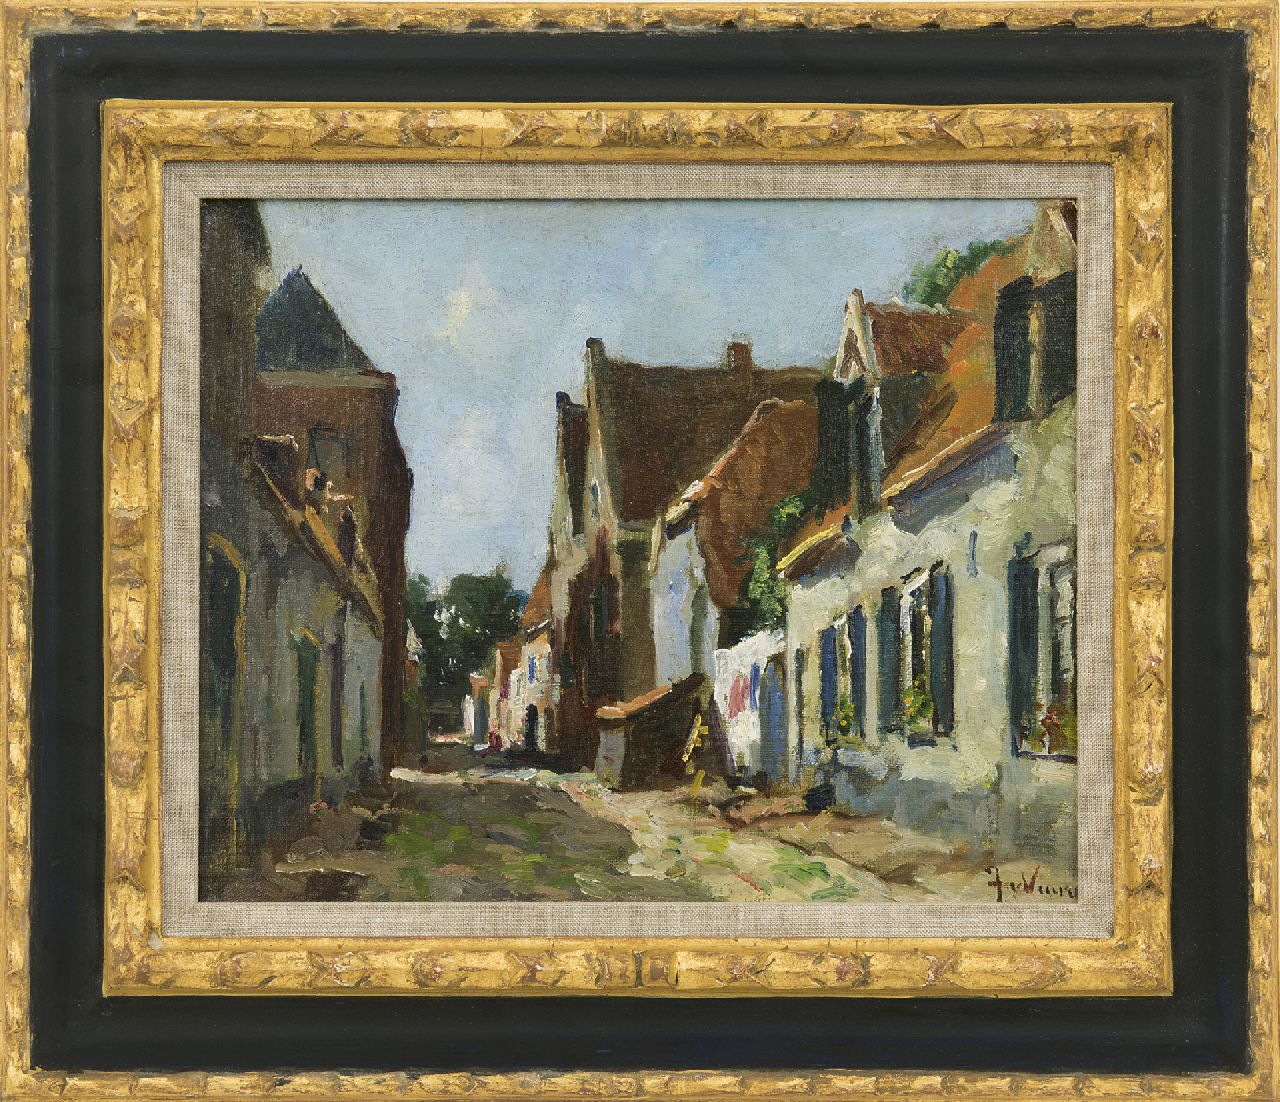 Vuuren J. van | Jan van Vuuren | Paintings offered for sale | A sunny village street, oil on canvas 24.0 x 29.8 cm, signed l.r.